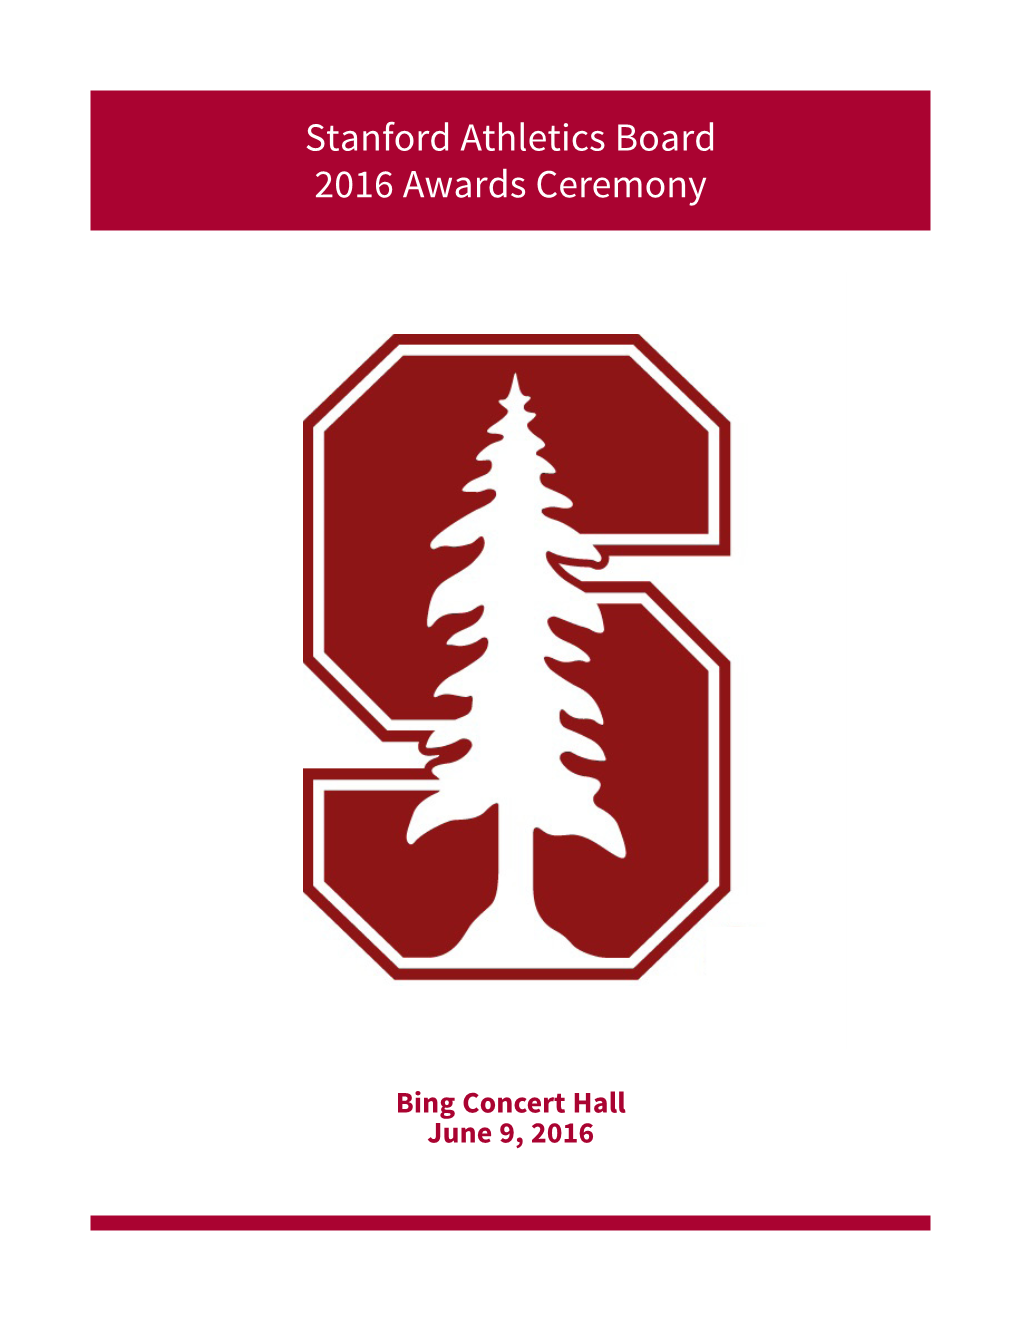 Stanford Athletics Board 2016 Awards Ceremony